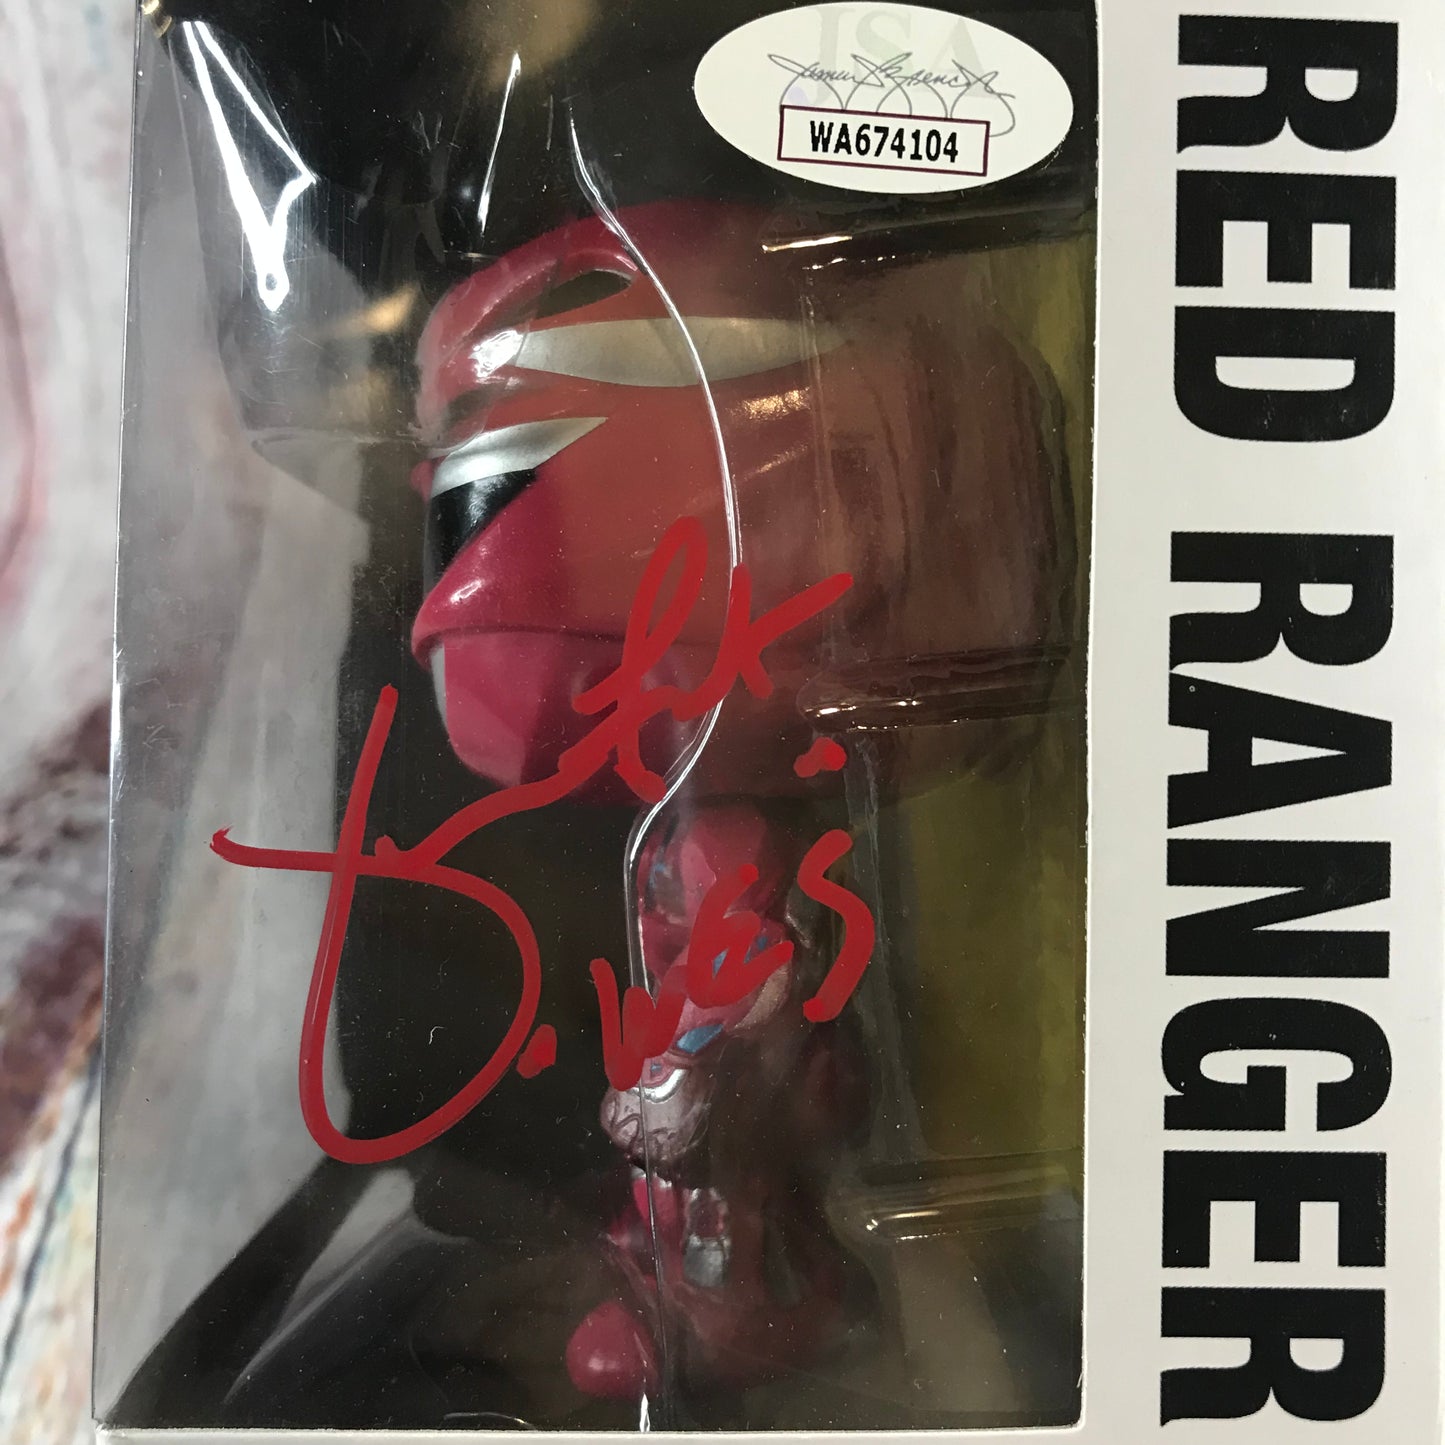 400 Signed Power Rangers, Red Ranger (Box Damage)